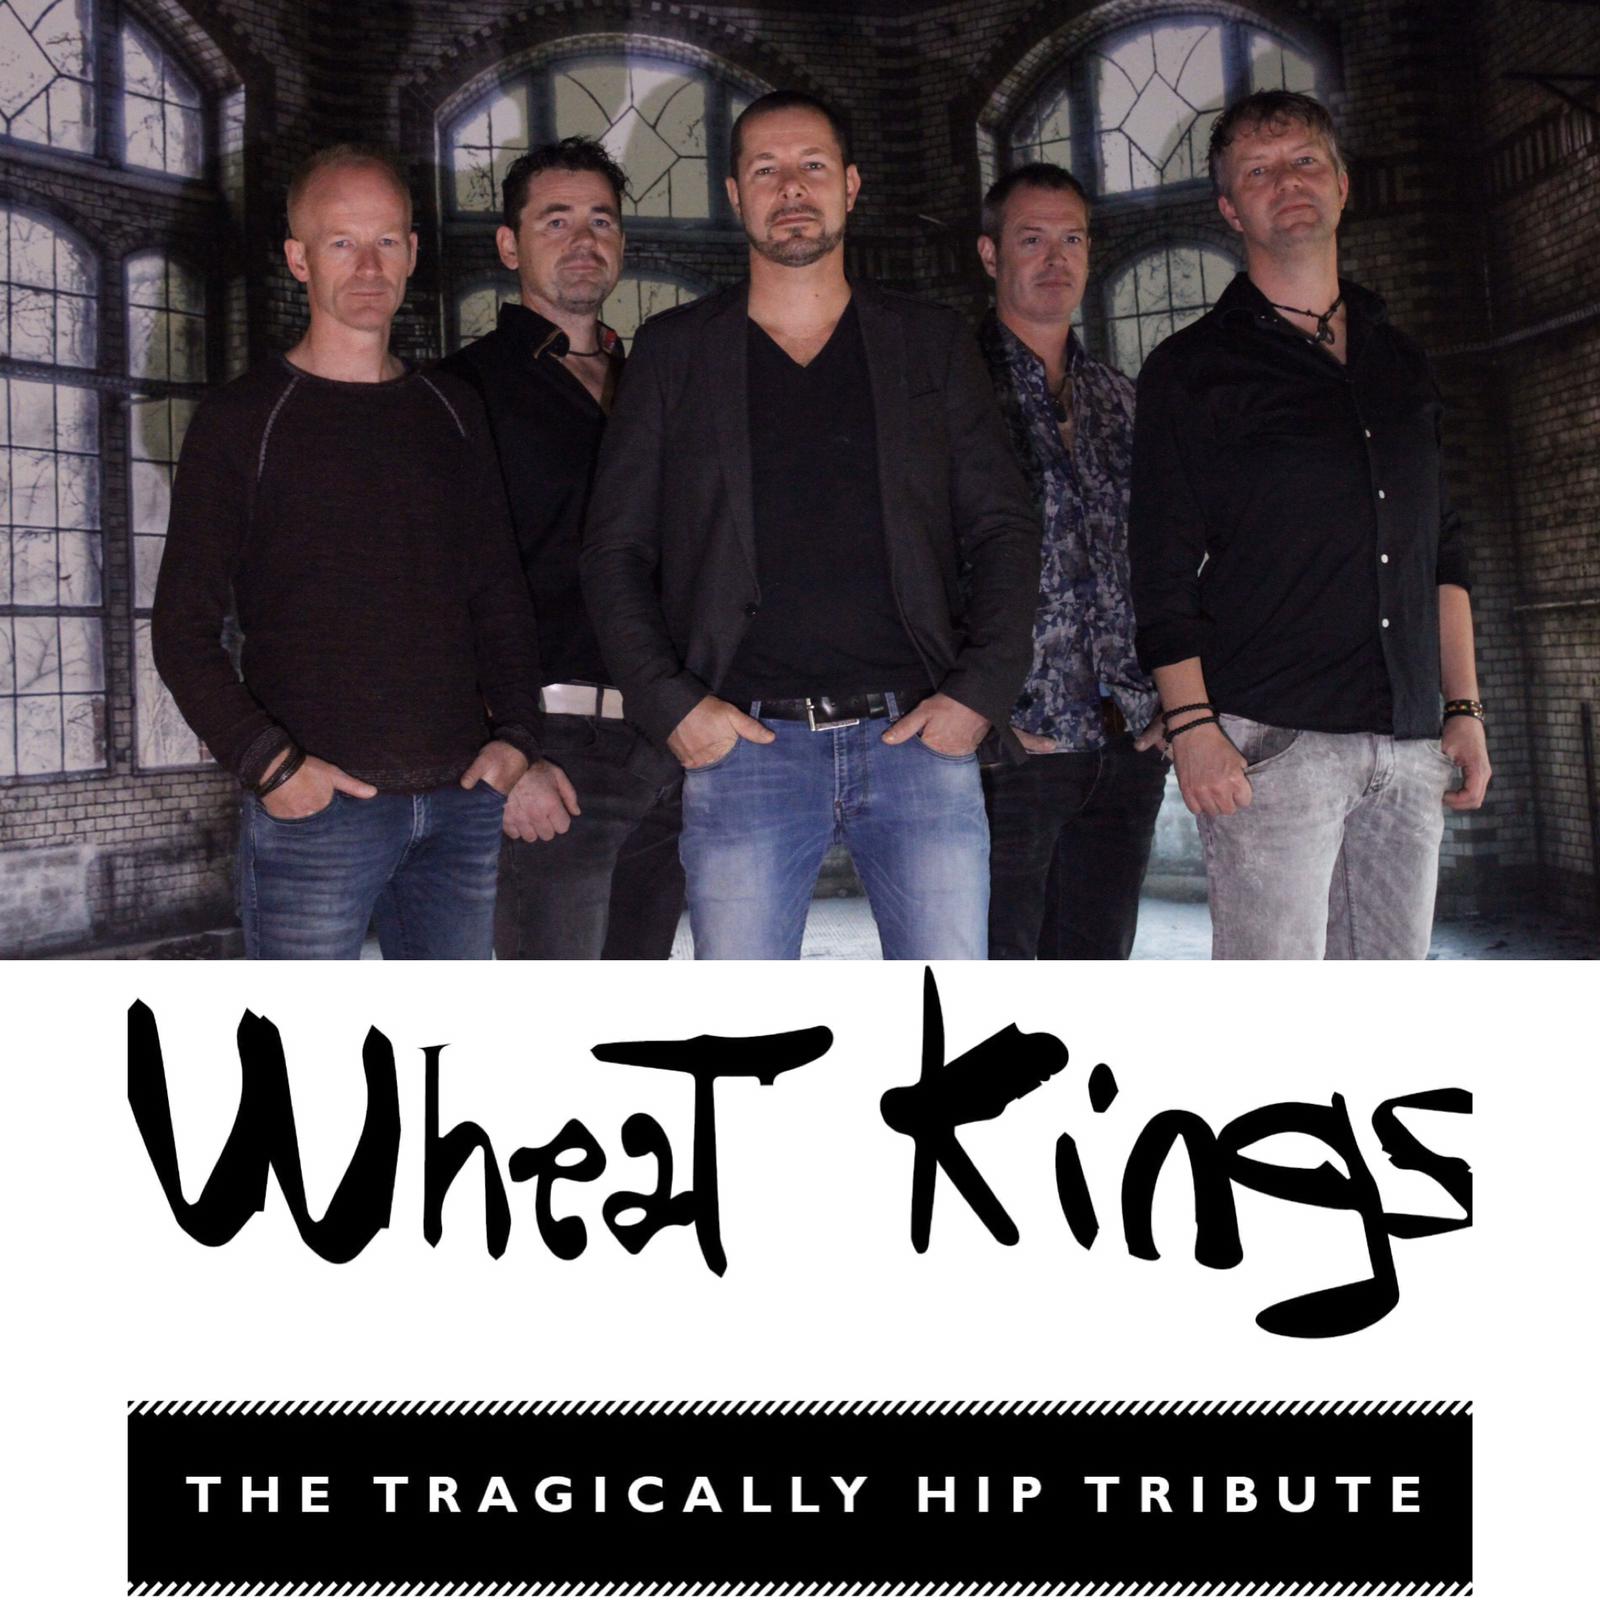 Wheat Kings